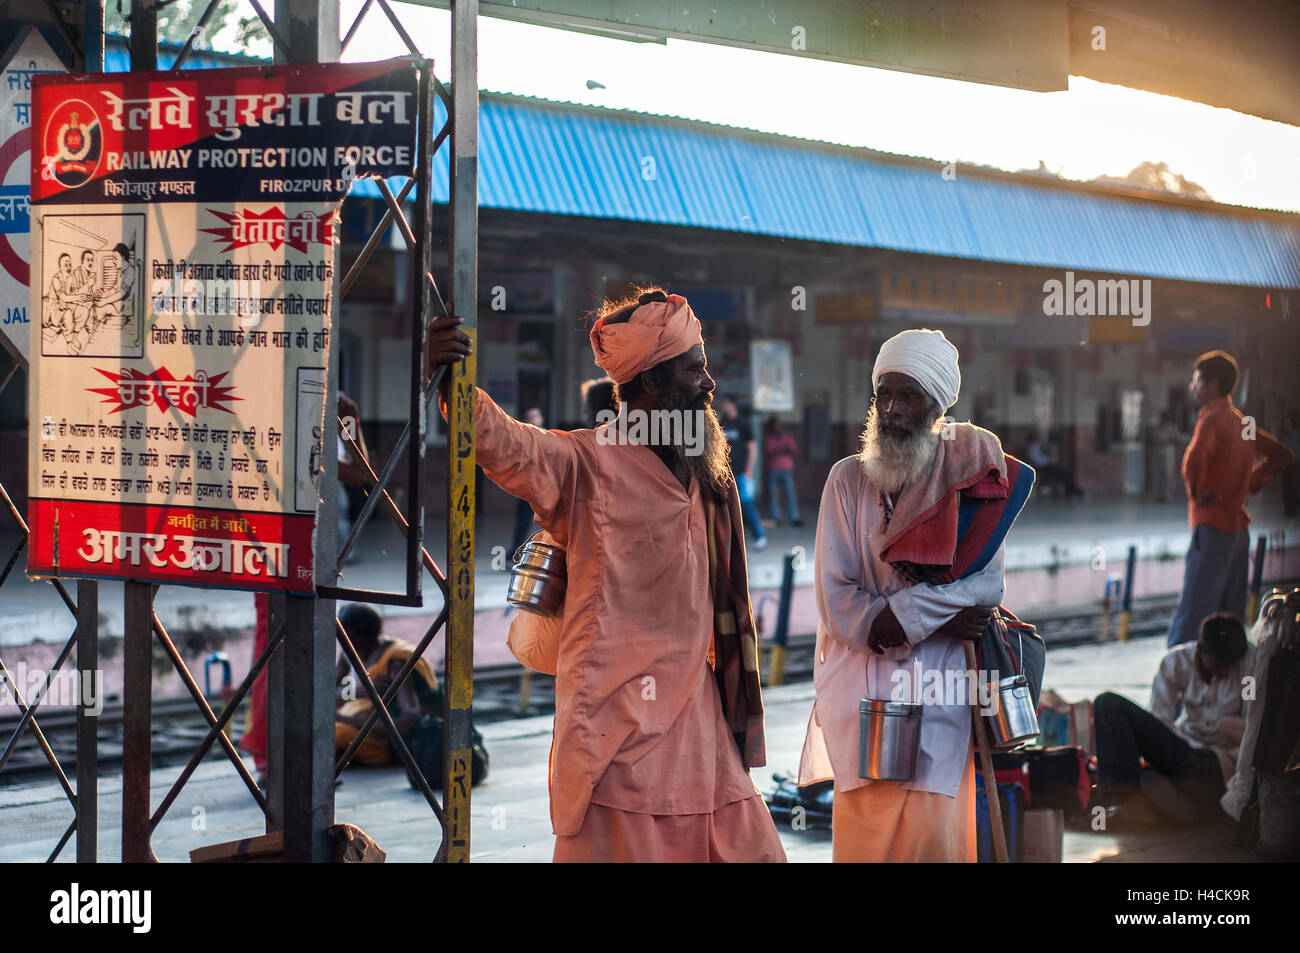 Train station scene in India Stock Photo - Alamy